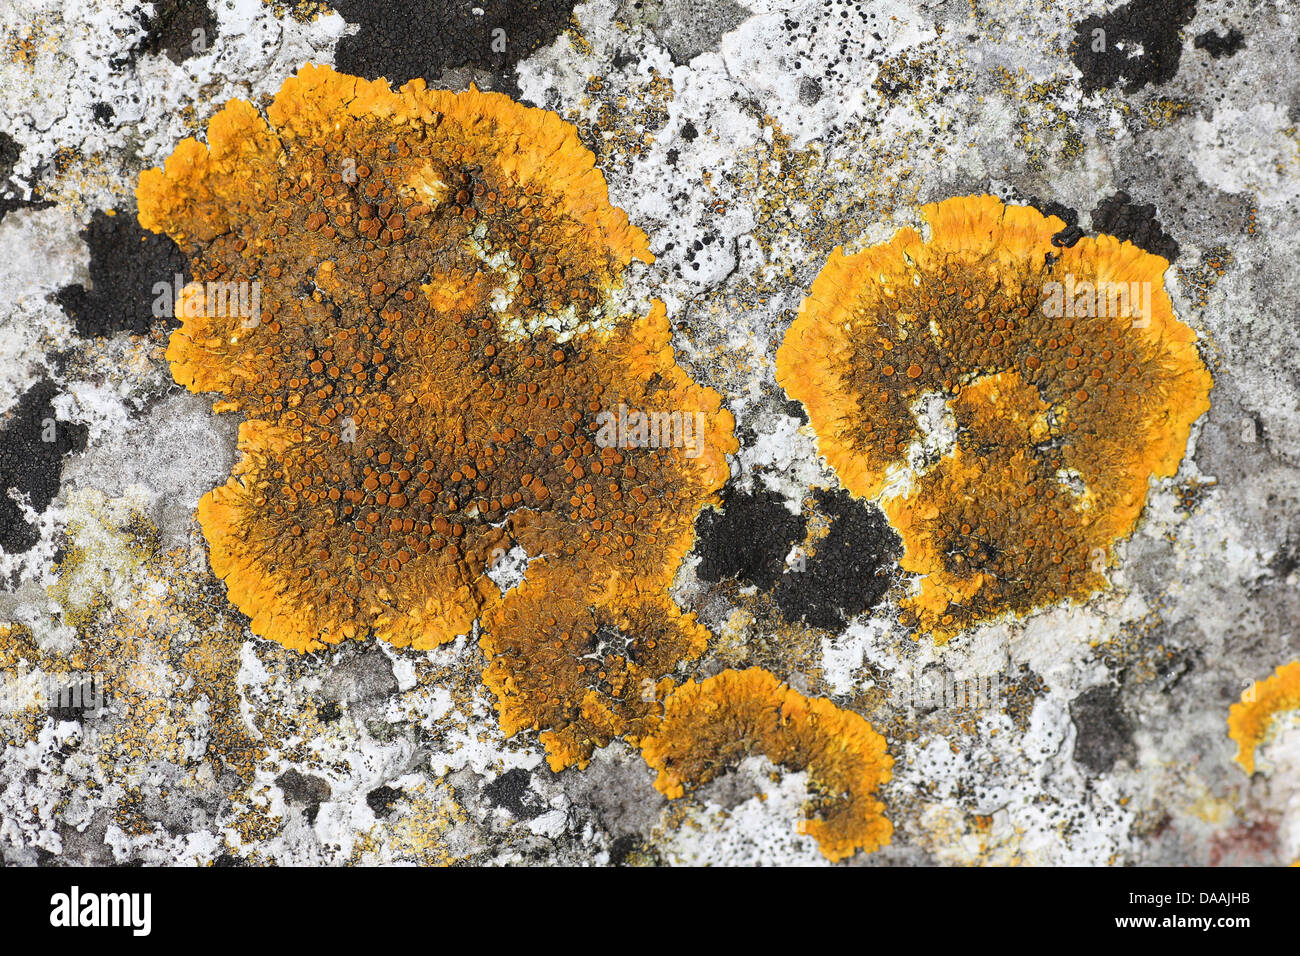 Caloplaca flavescens - an Orange-yellow Crustose Lichen Found On Calcareous Rocks Stock Photo